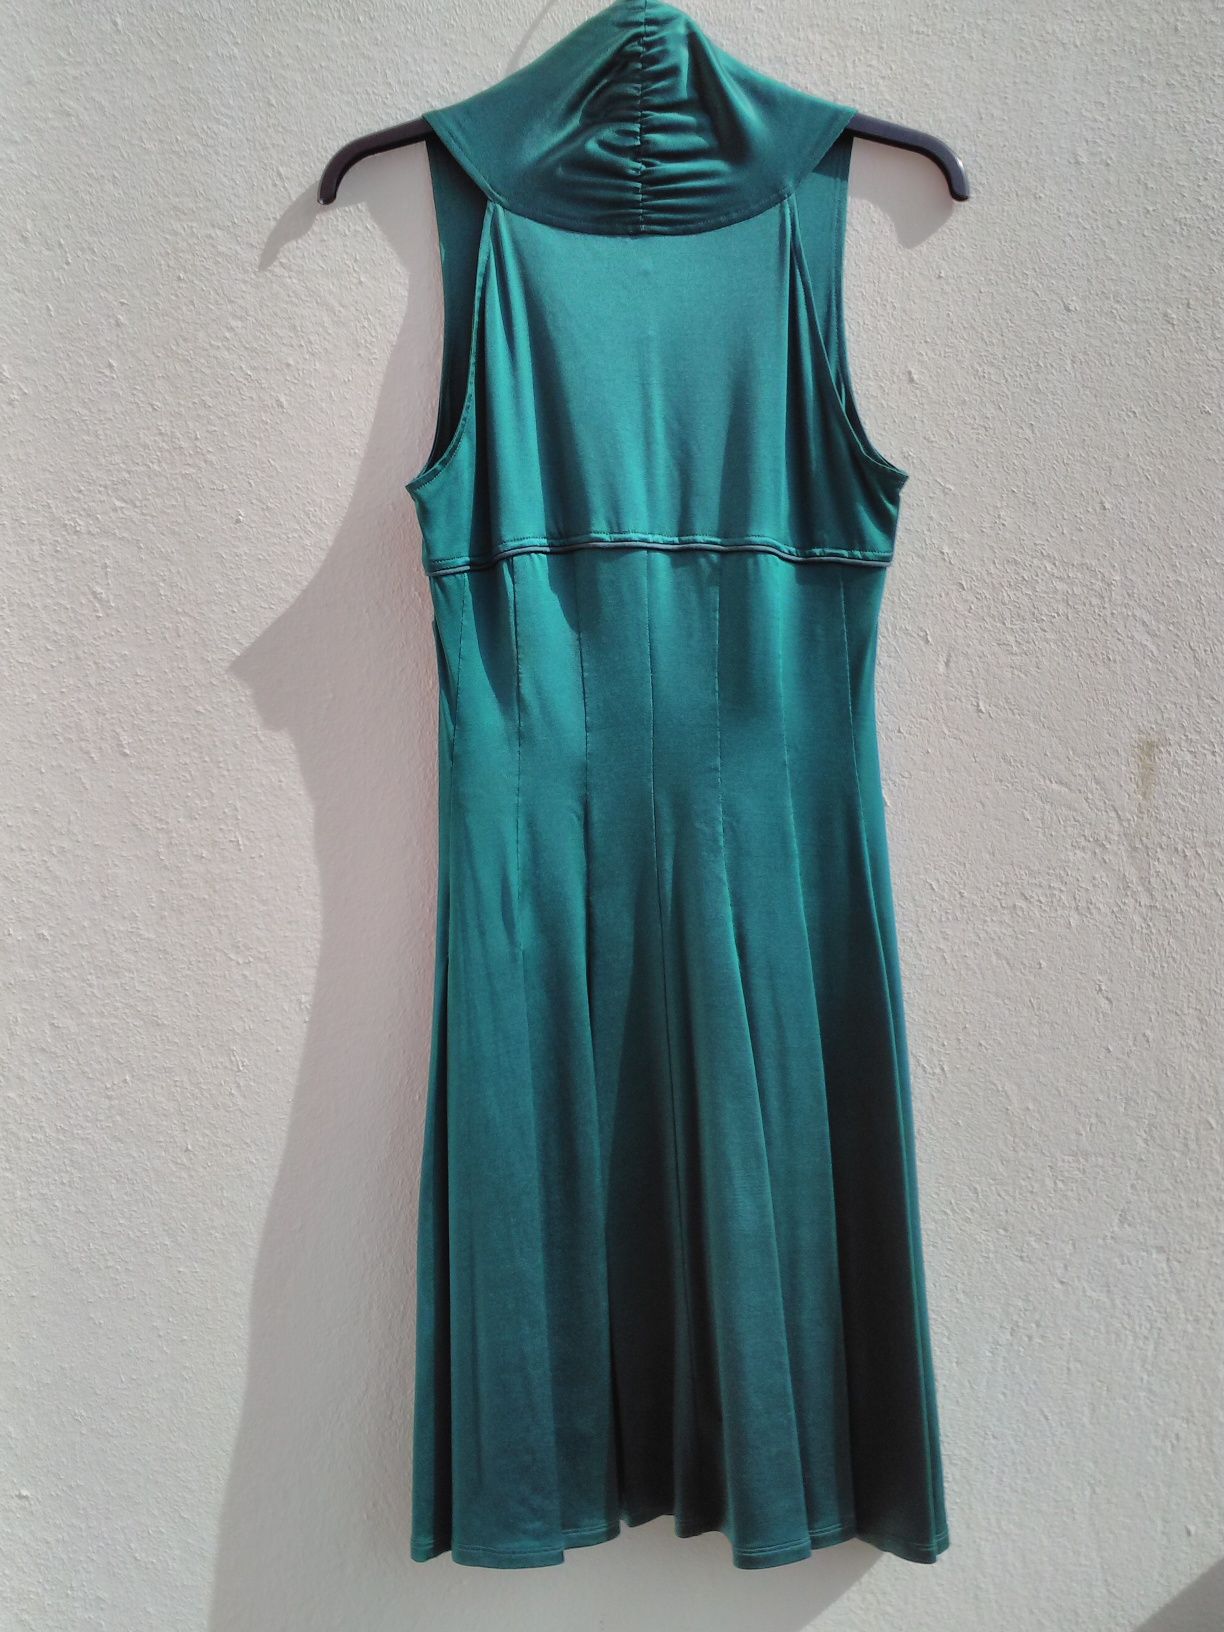 Vestido verde esmeralda-tamanho 34